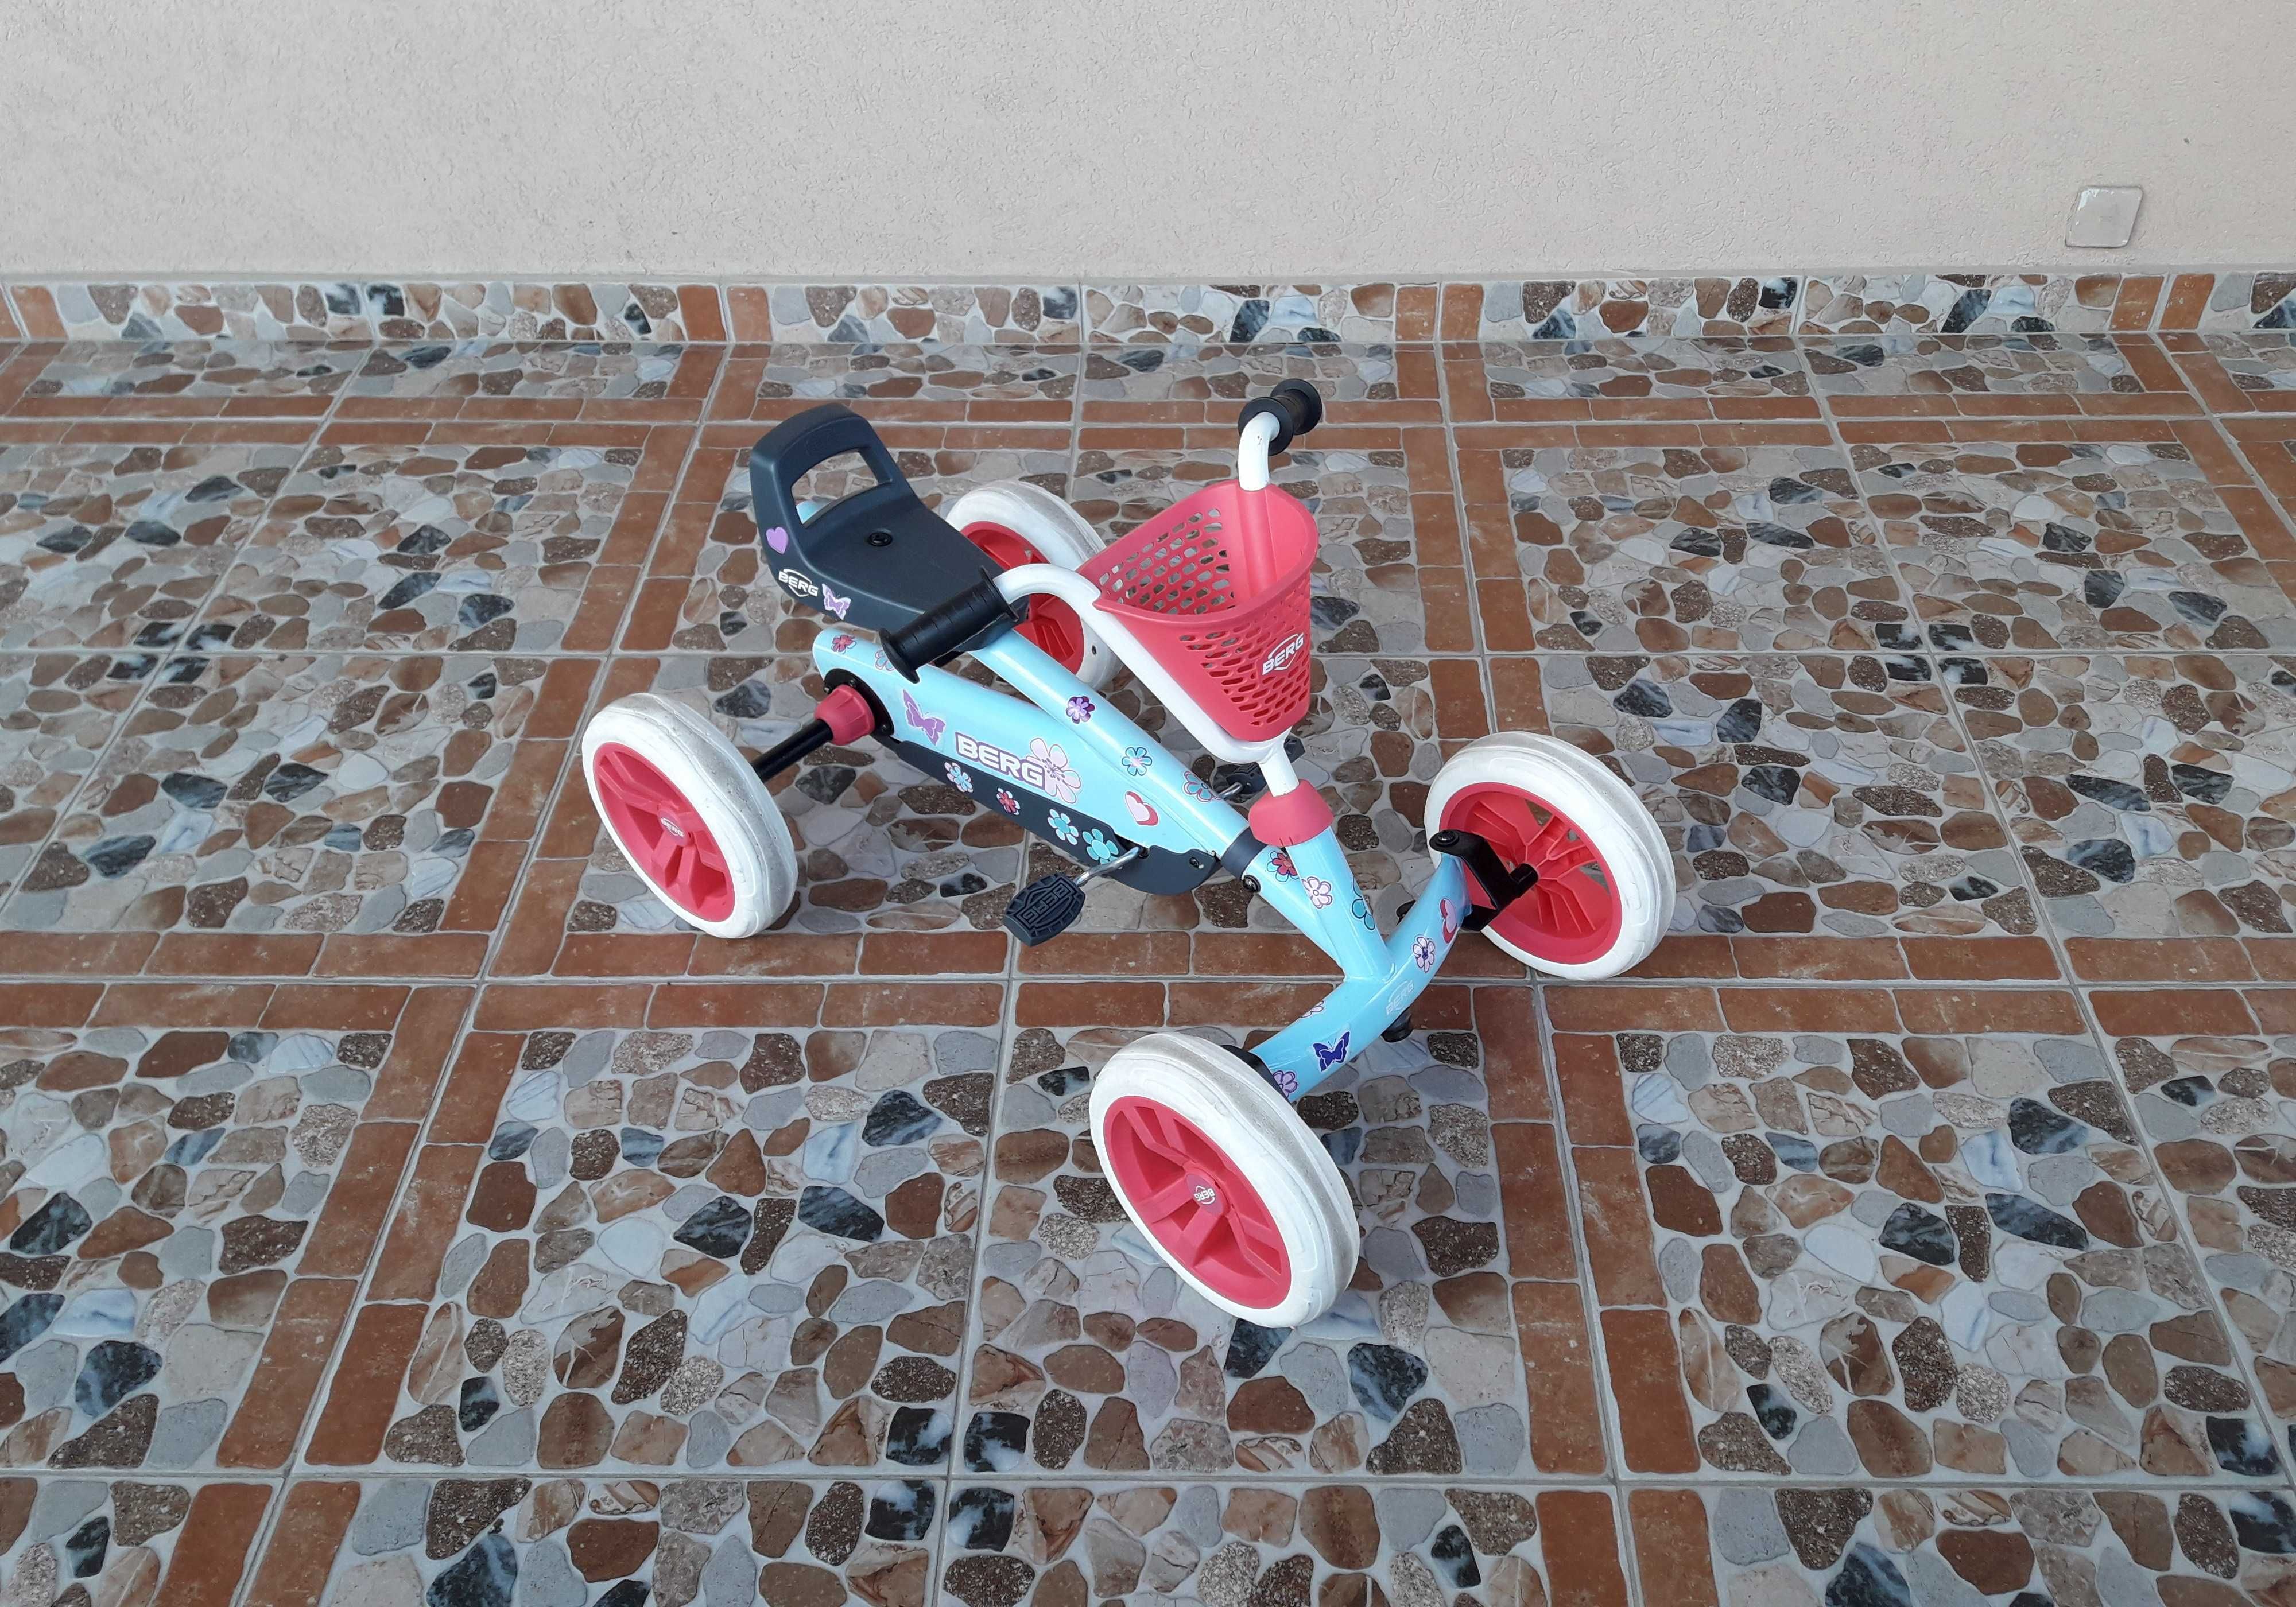 Cart (Kart) cu pedale pentru copii Berg Buzzy Bloom – alb/roz